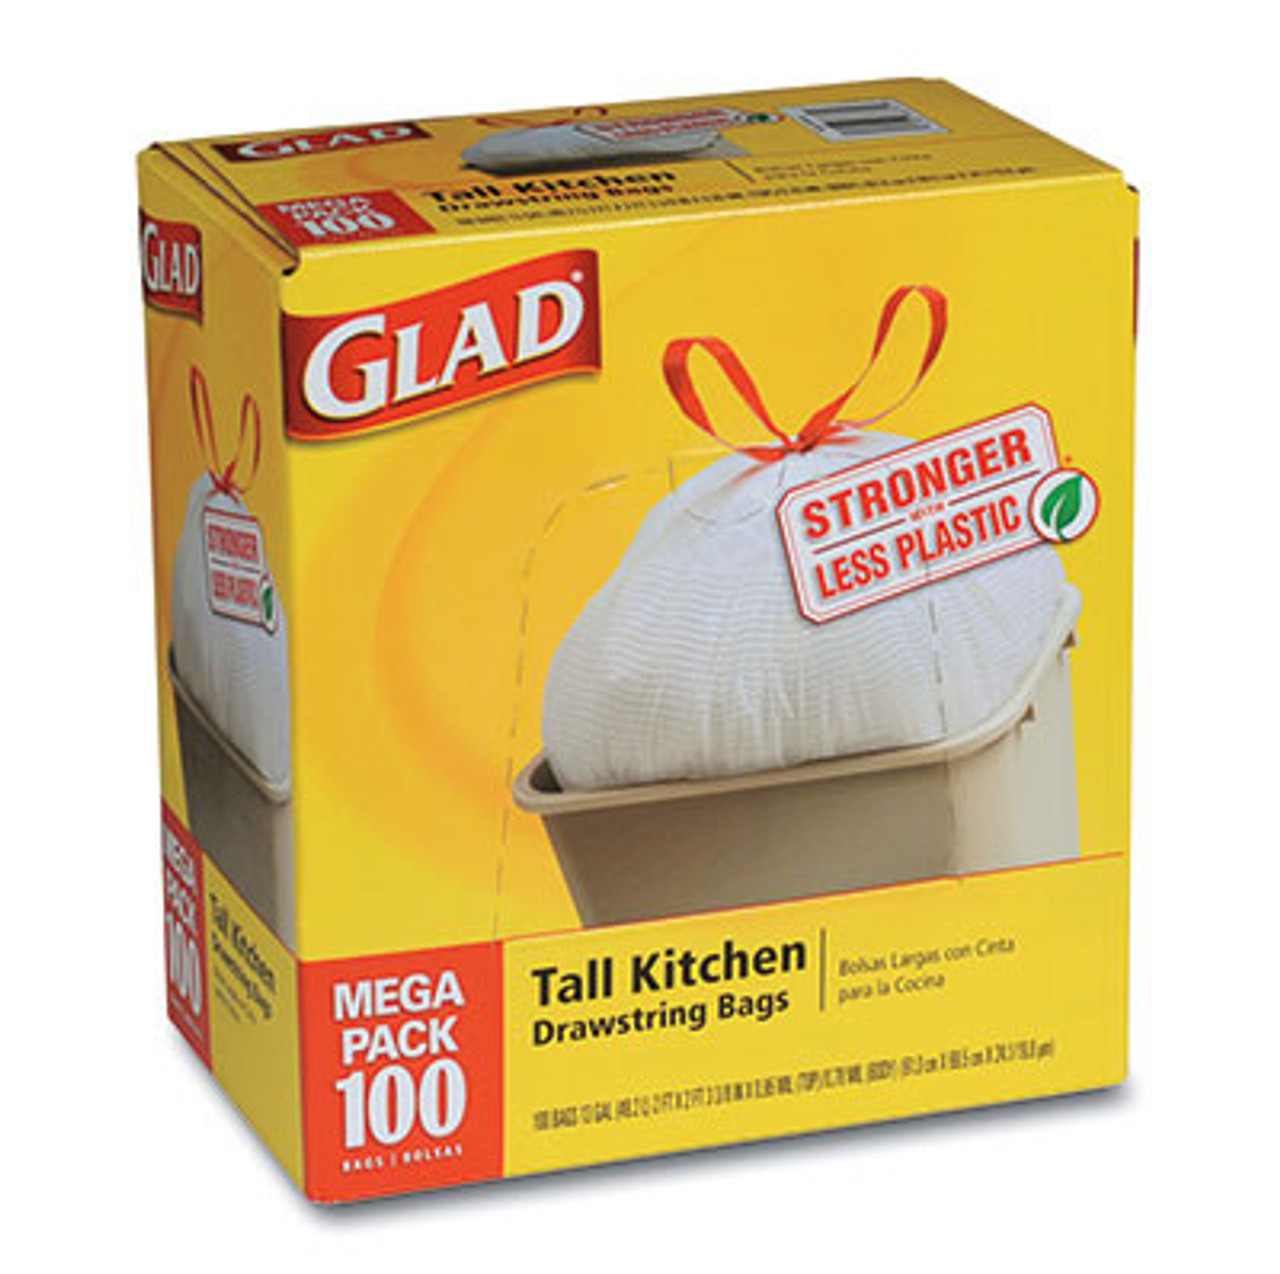 Glad 13 Gallon Tall Kitchen Drawstring Trash Bags, White - 100/Box